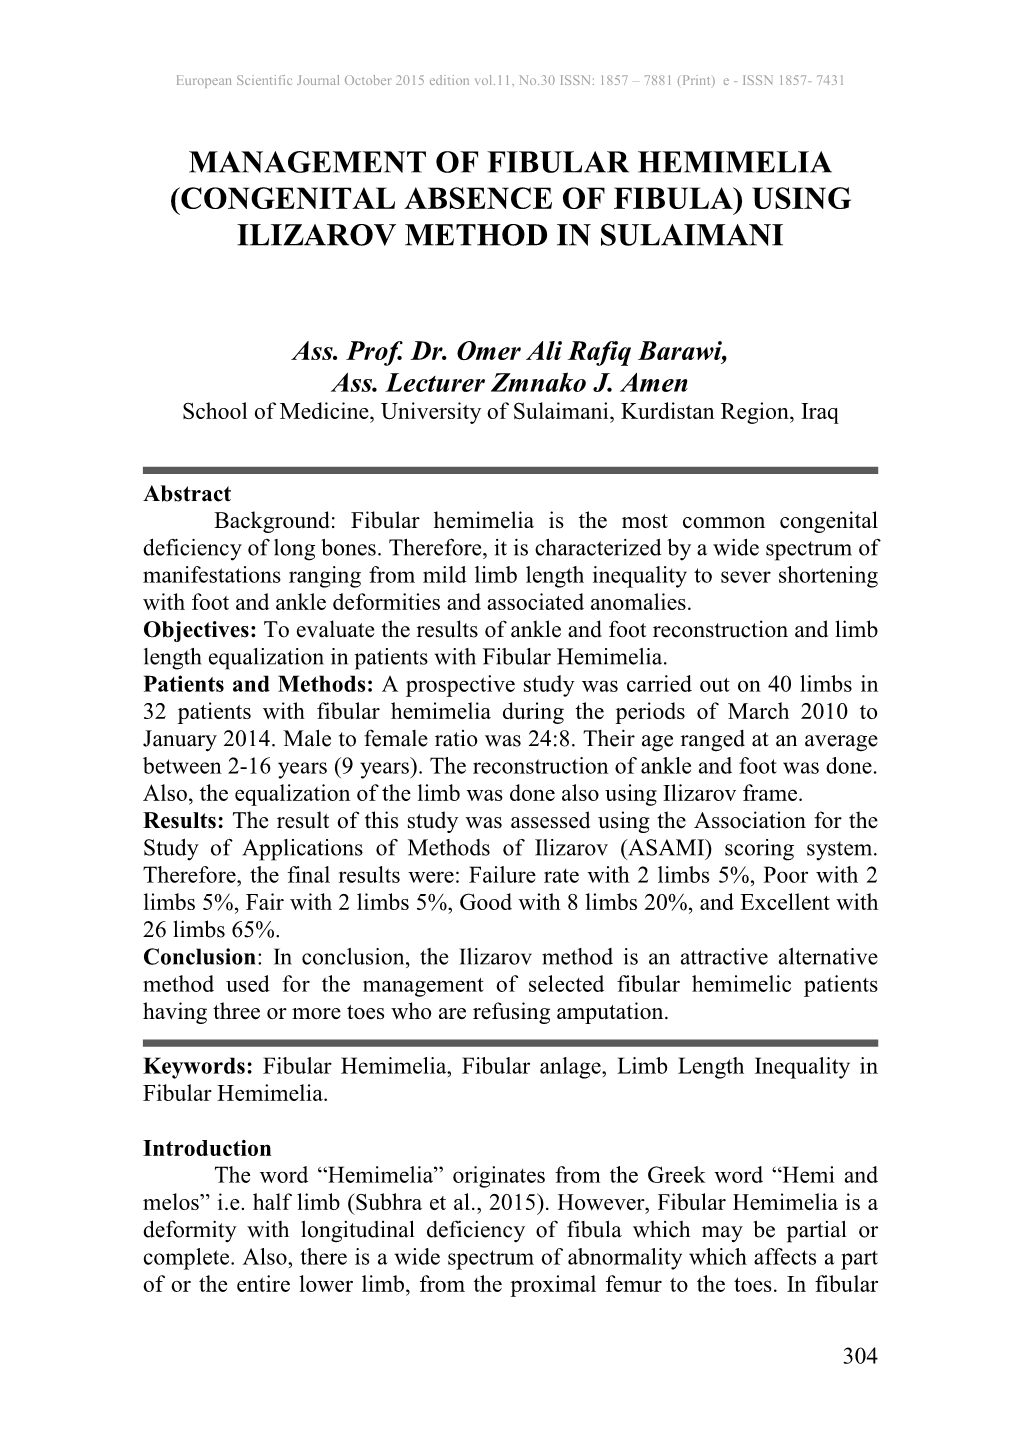 Management of Fibular Hemimelia (Congenital Absence of Fibula) Using Ilizarov Method in Sulaimani